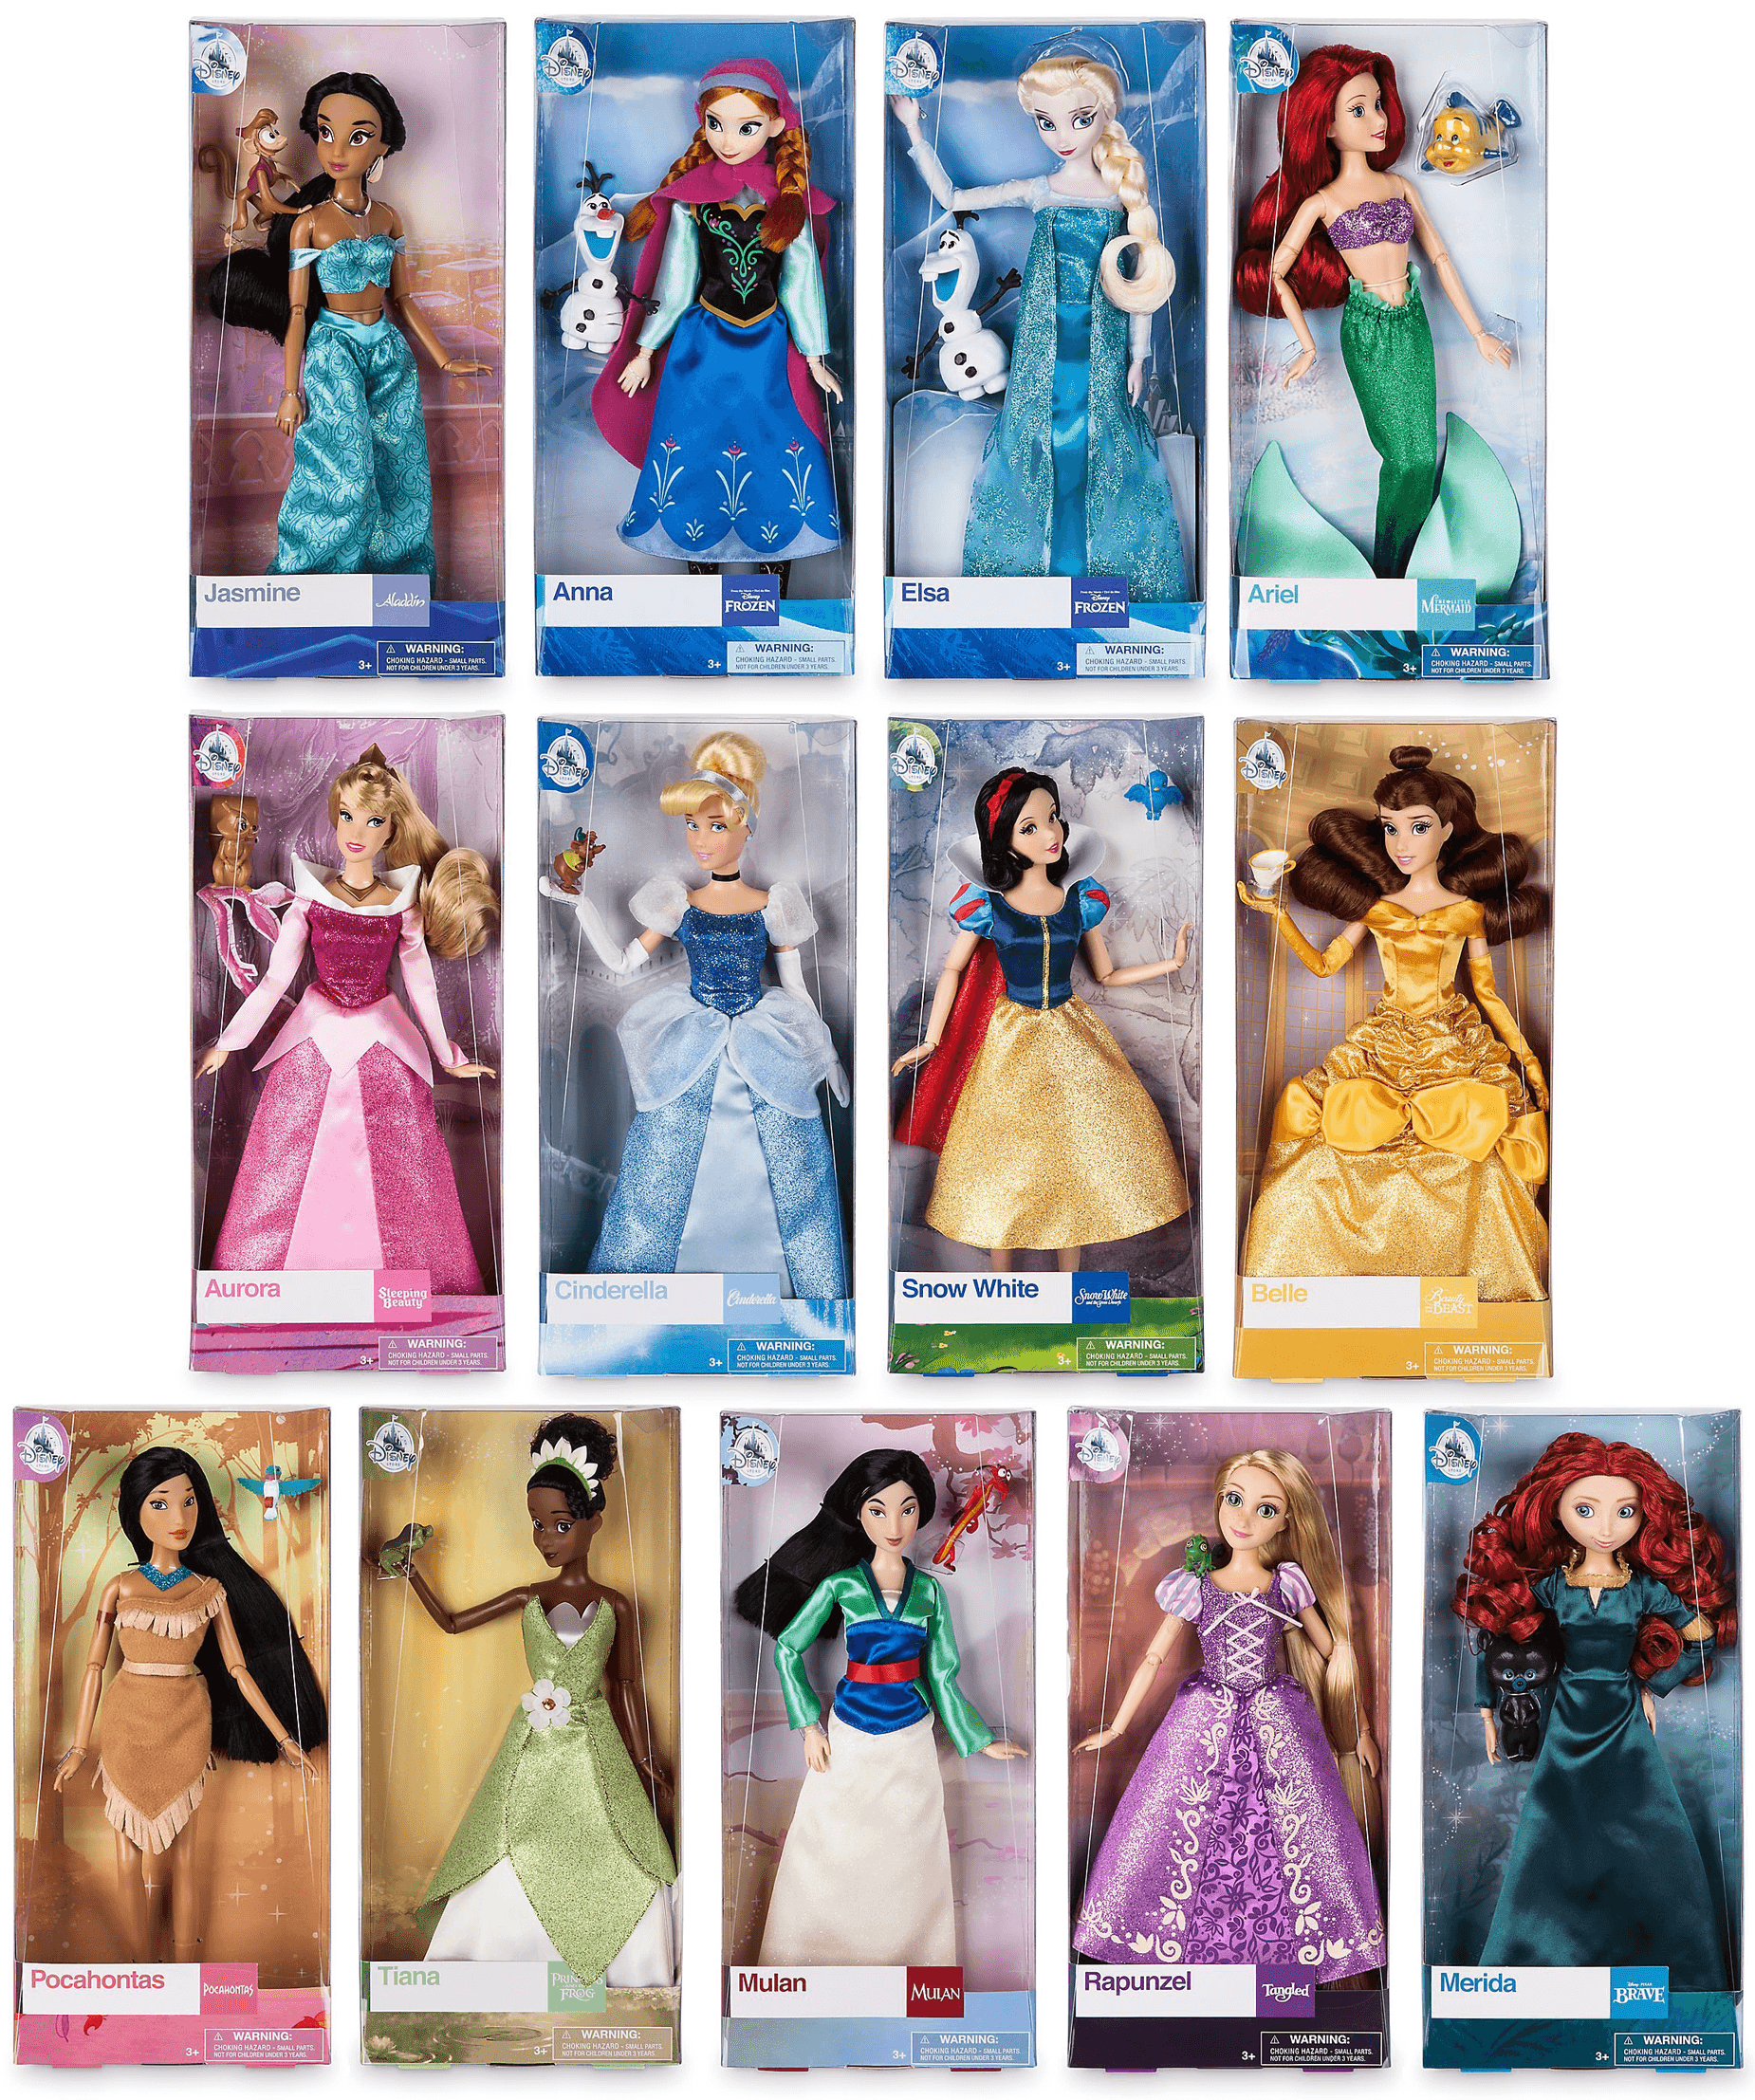 12 disney princess dolls